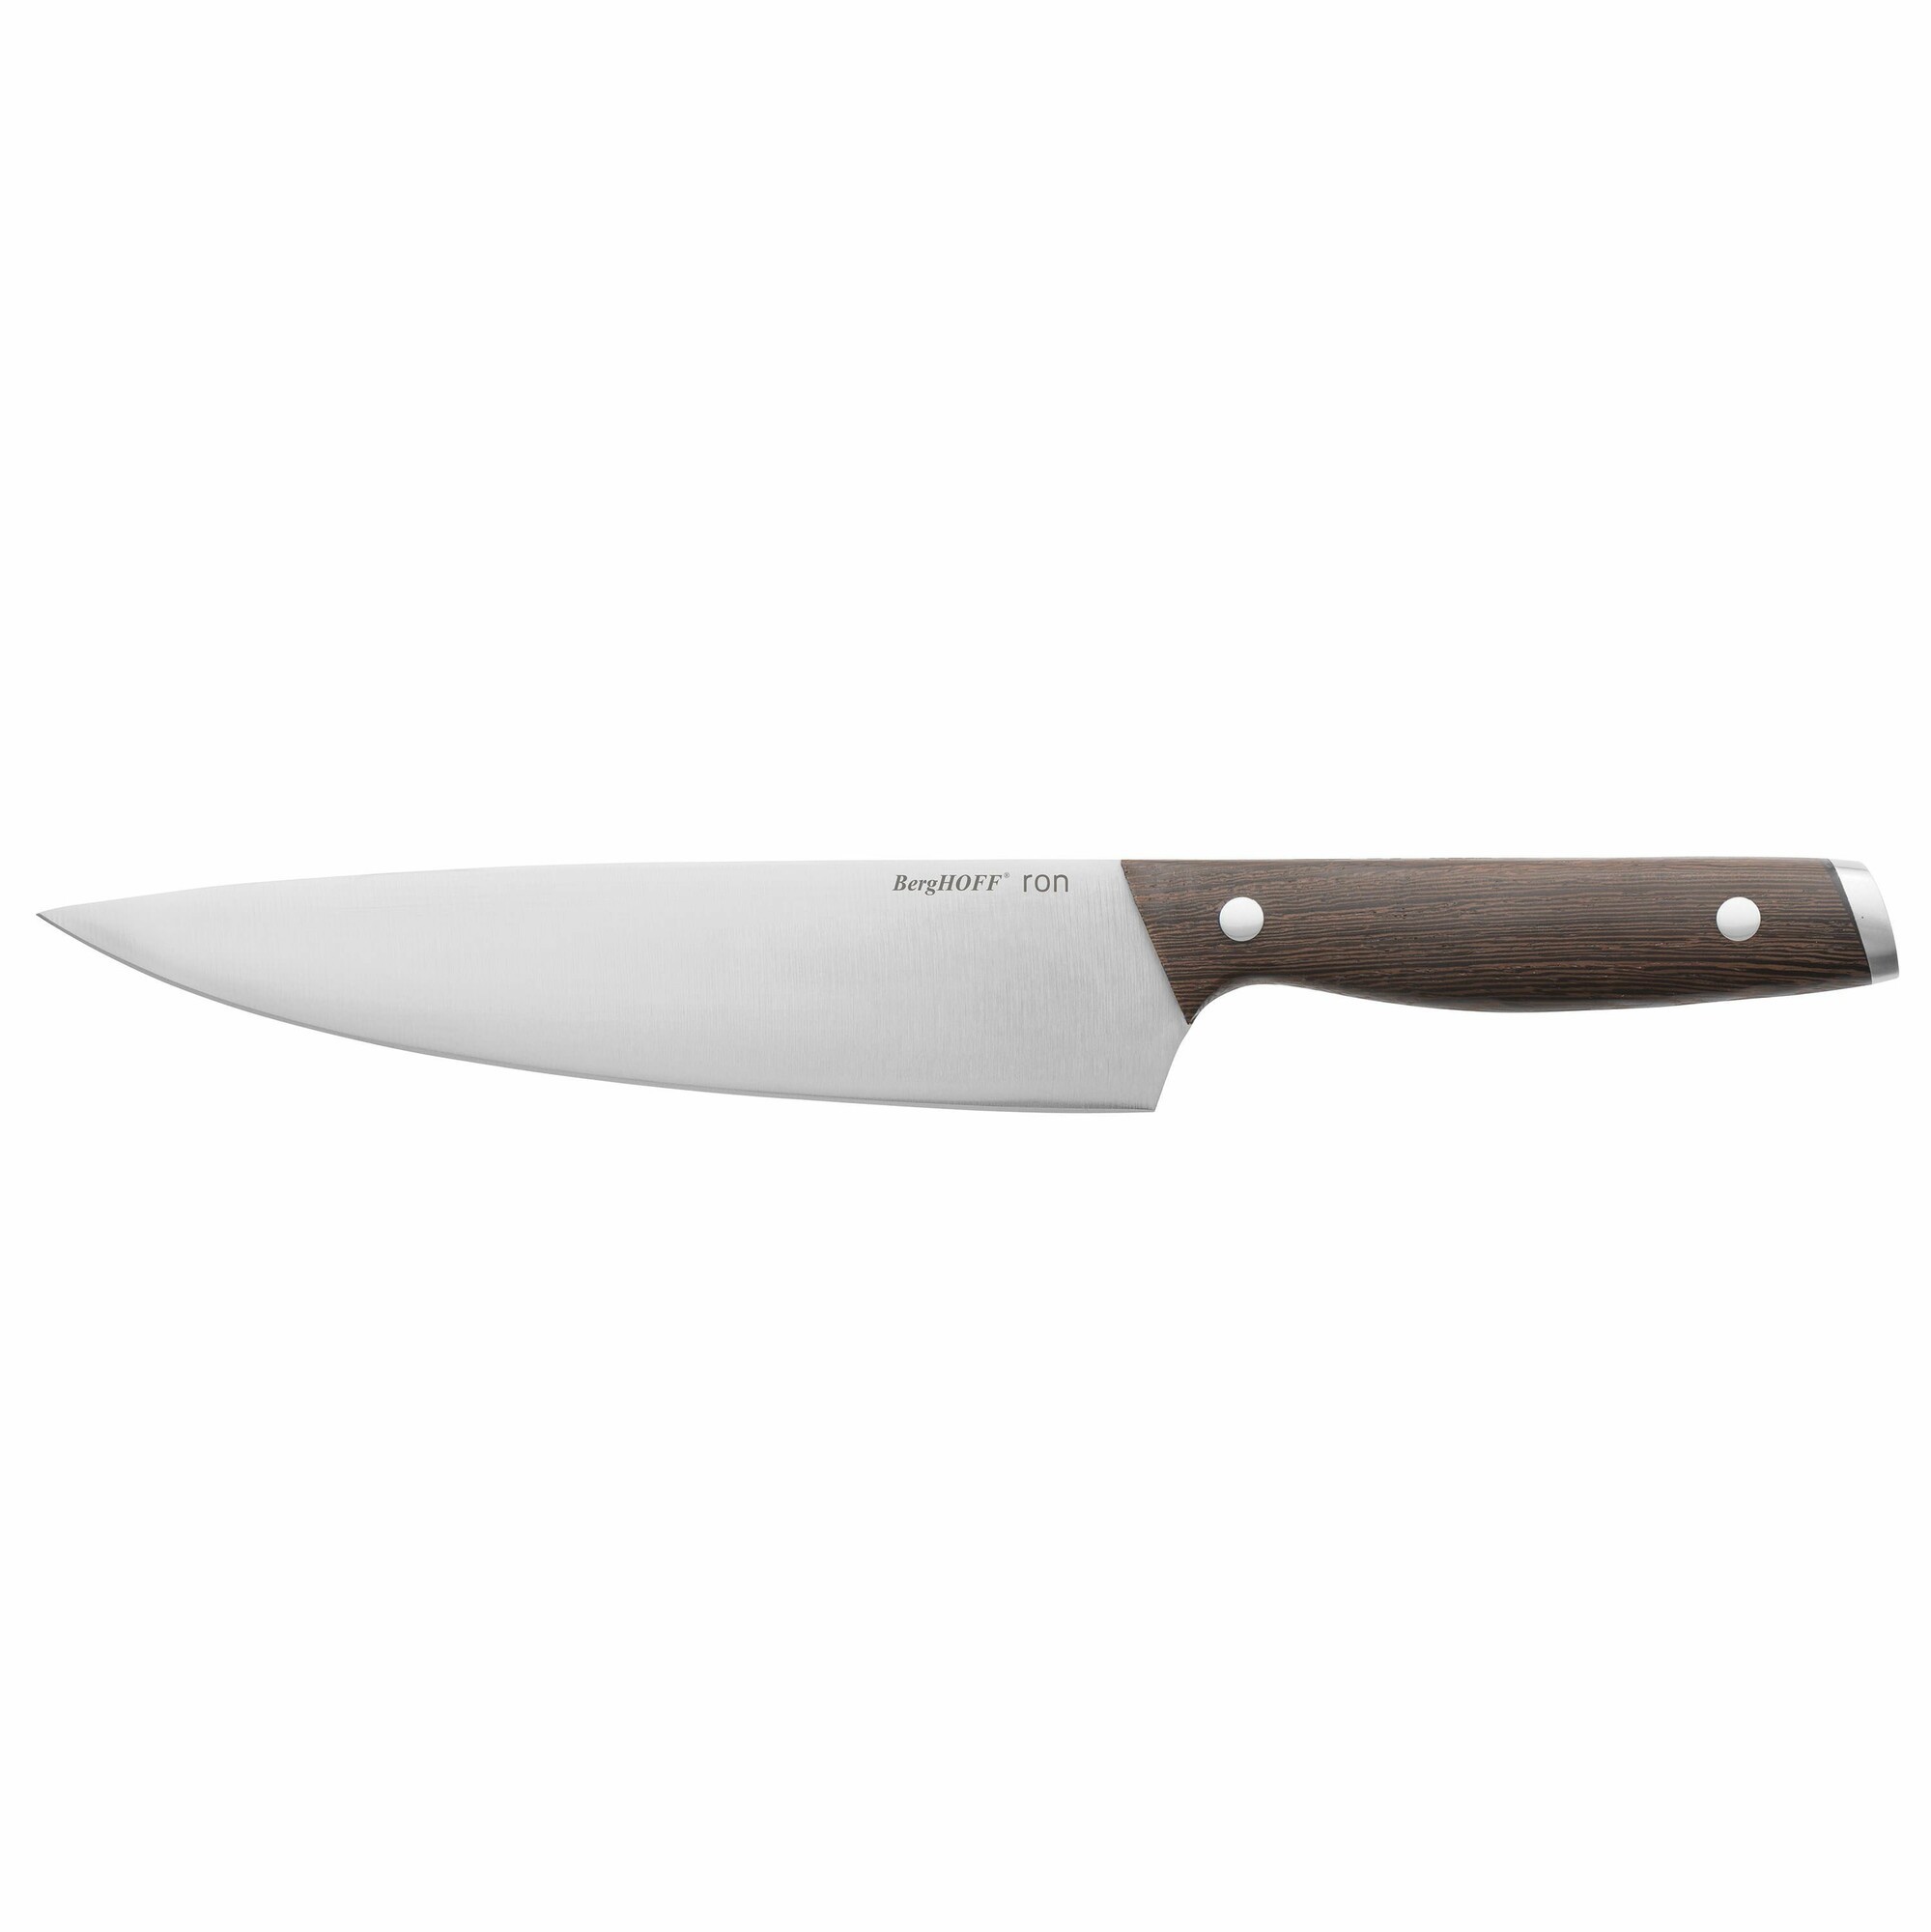 BergHOFF Ron Chef's Knife - Black, 7.5 in - Harris Teeter